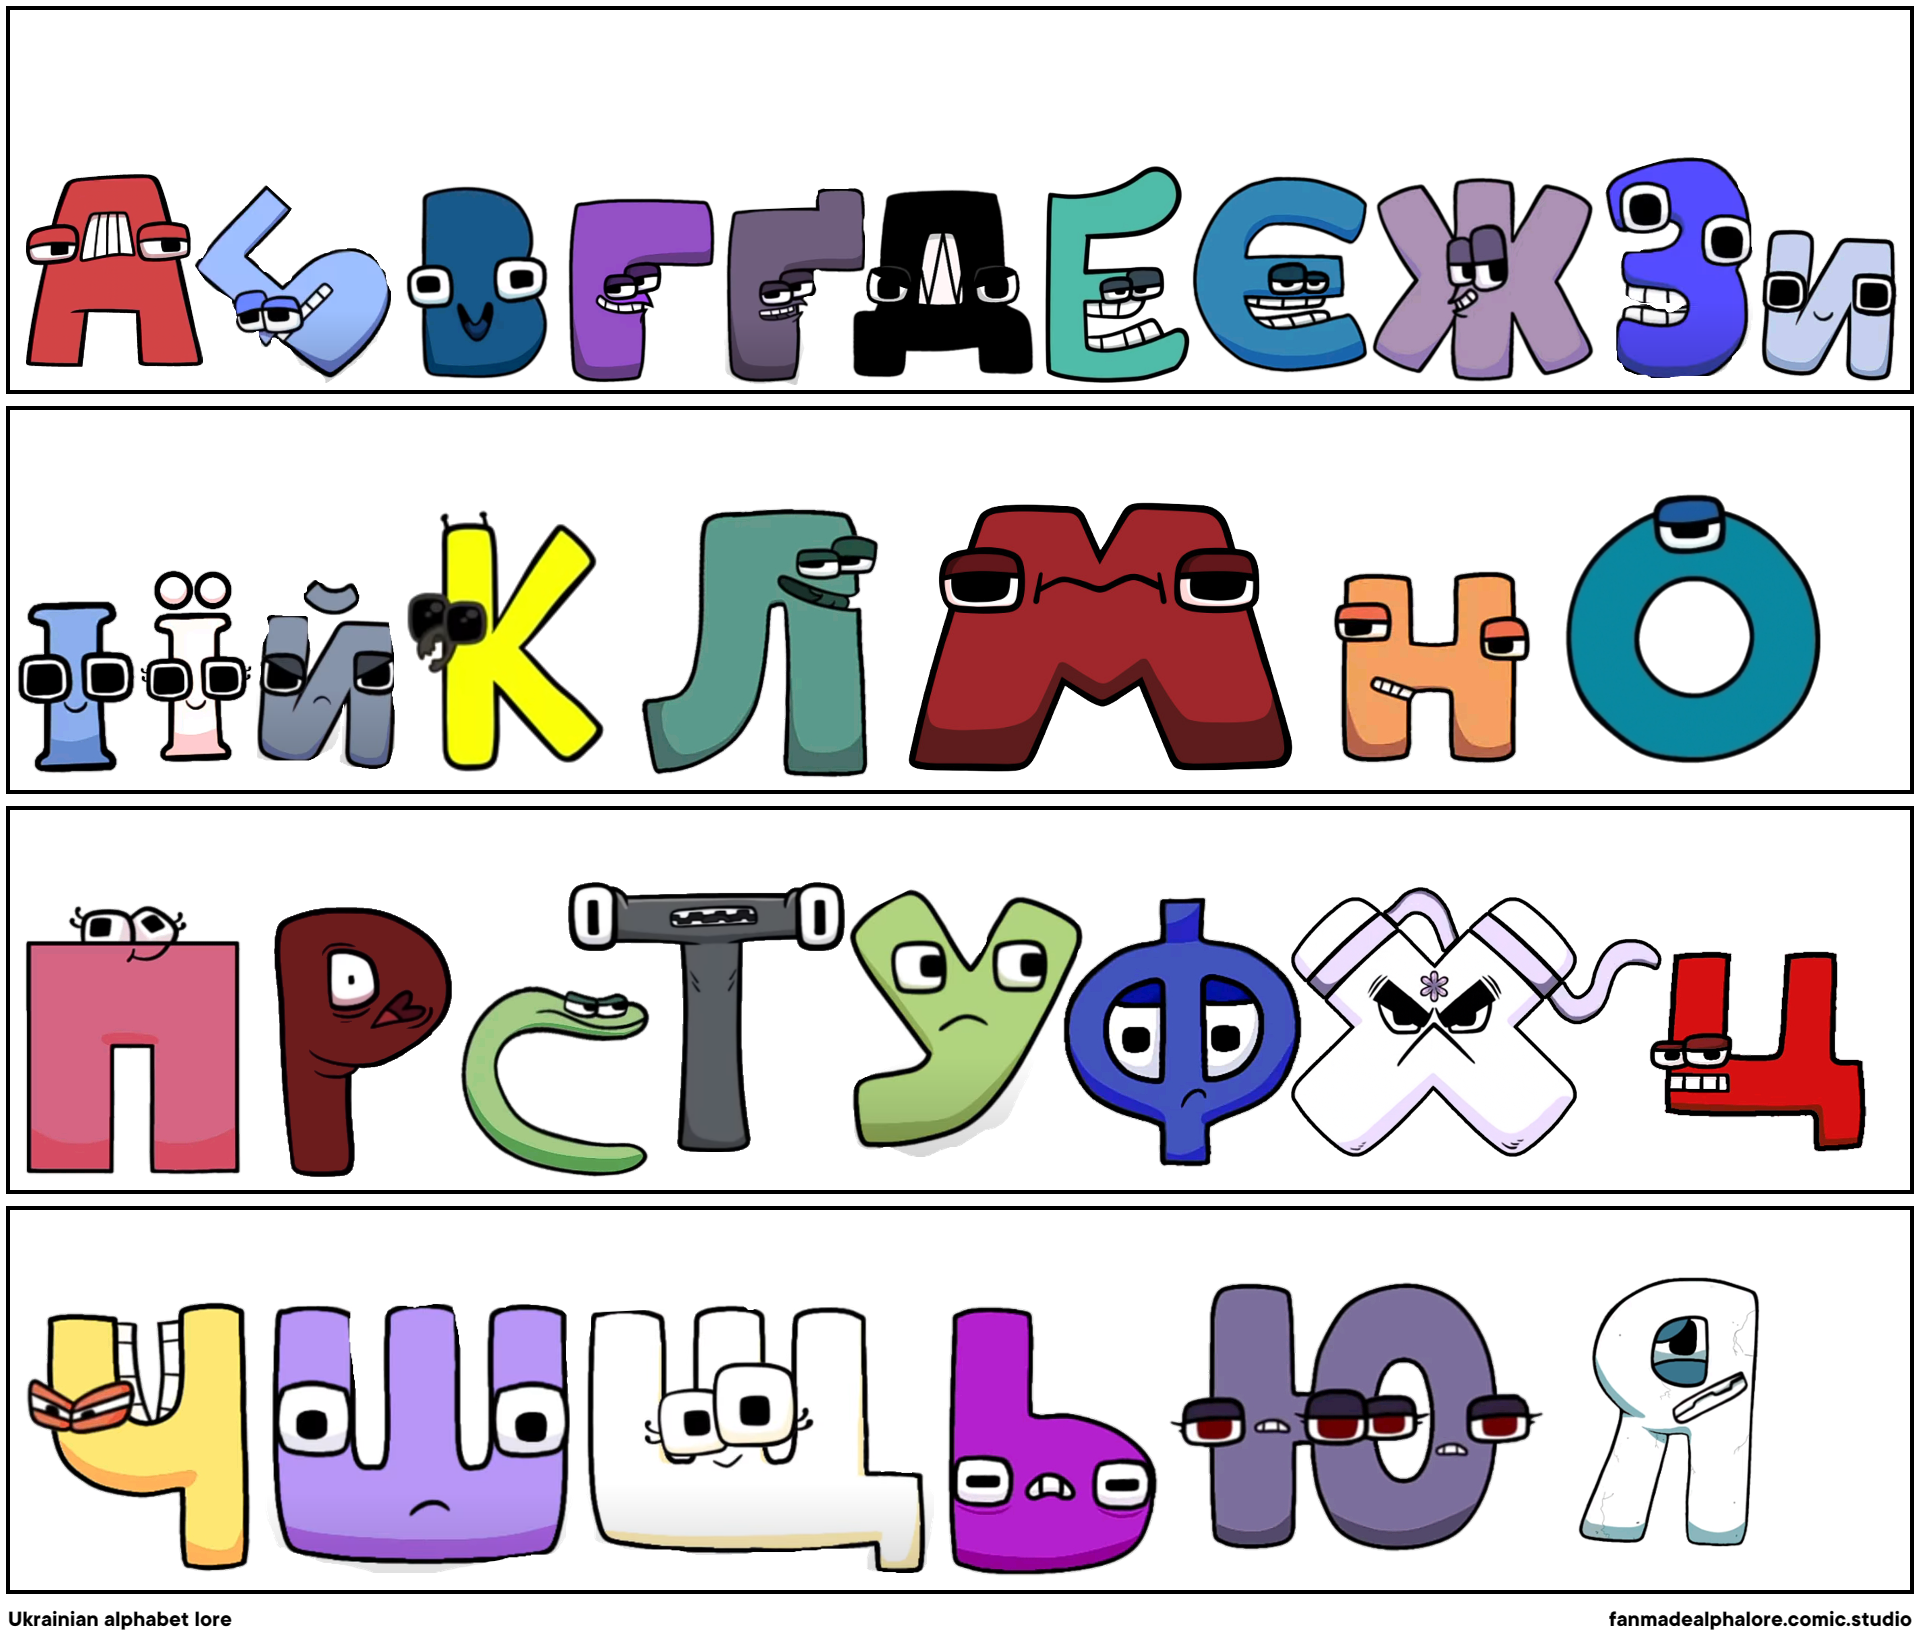 Ukrainian Alphabet Lore Comic Studio - make comics & memes with Ukrainian Alphabet  Lore characters